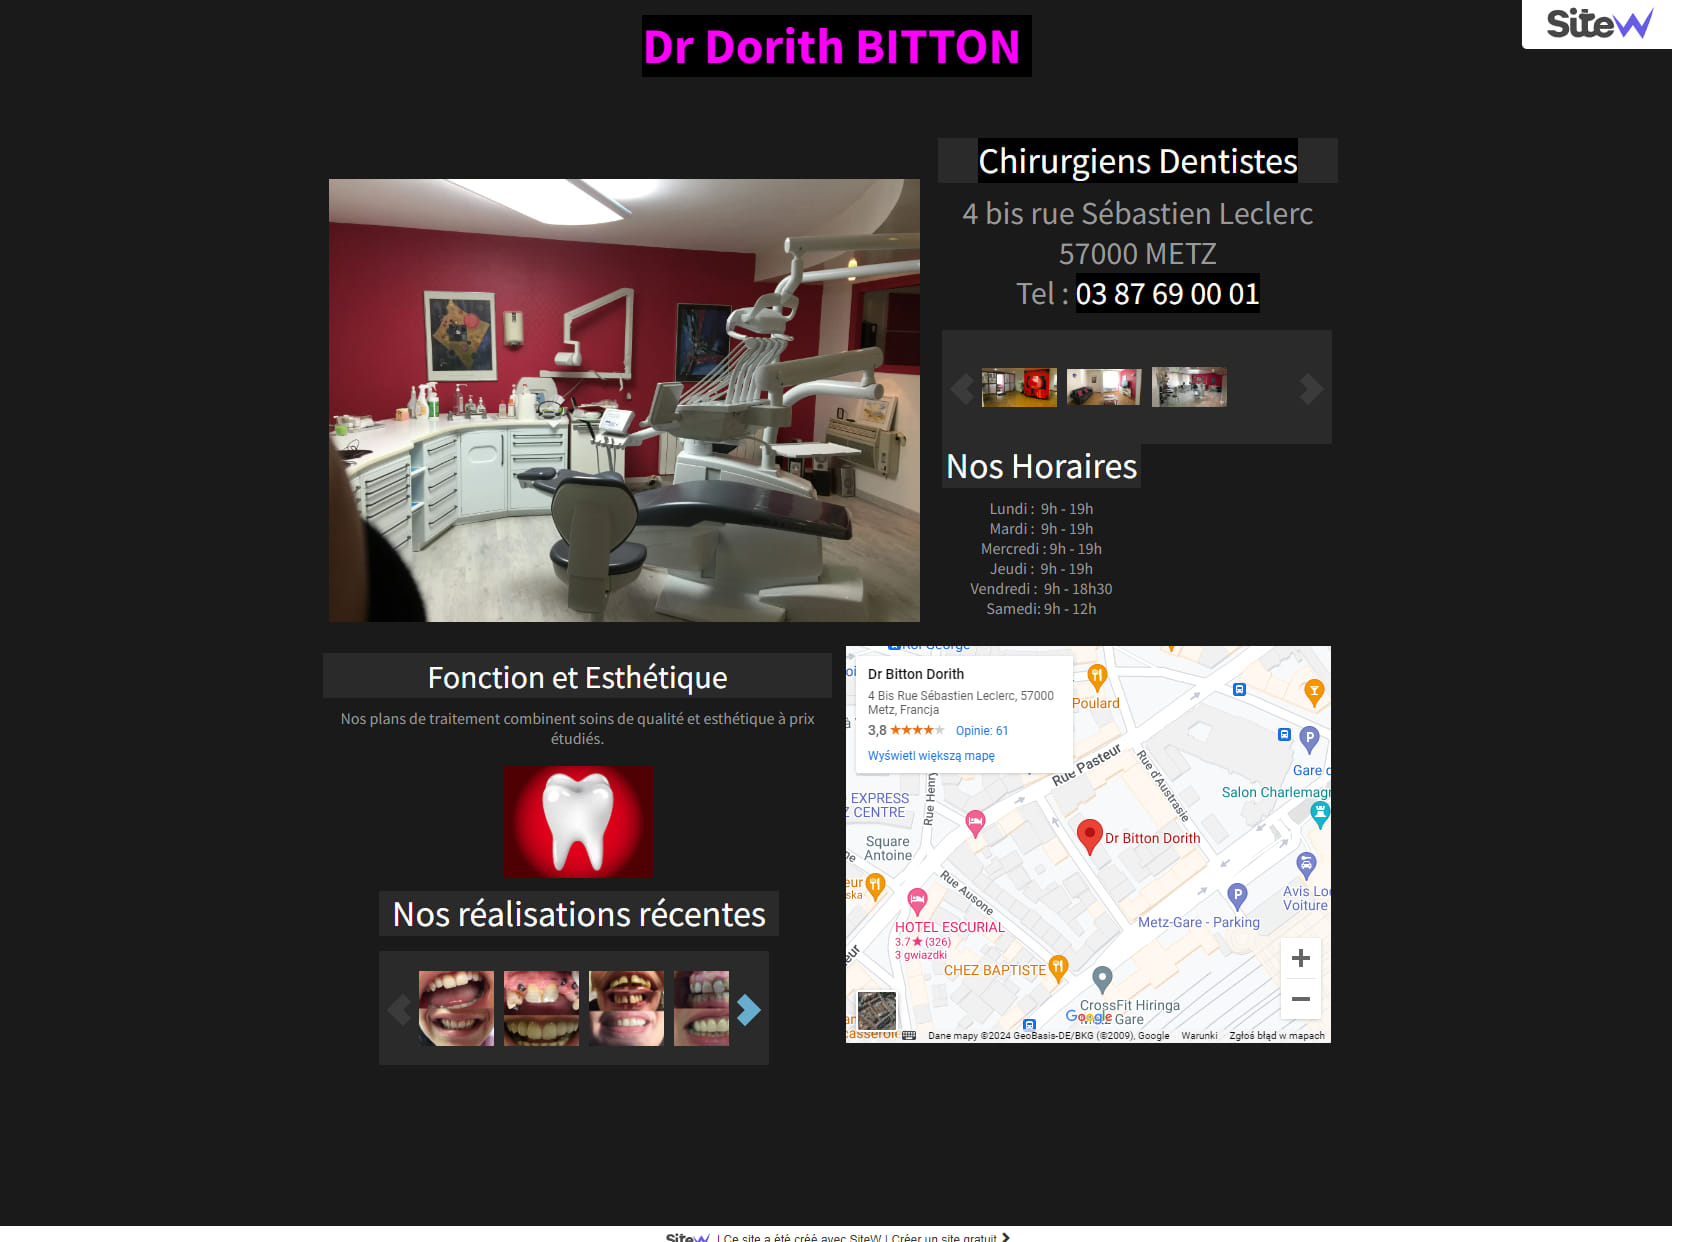 Dr Bitton Dorith